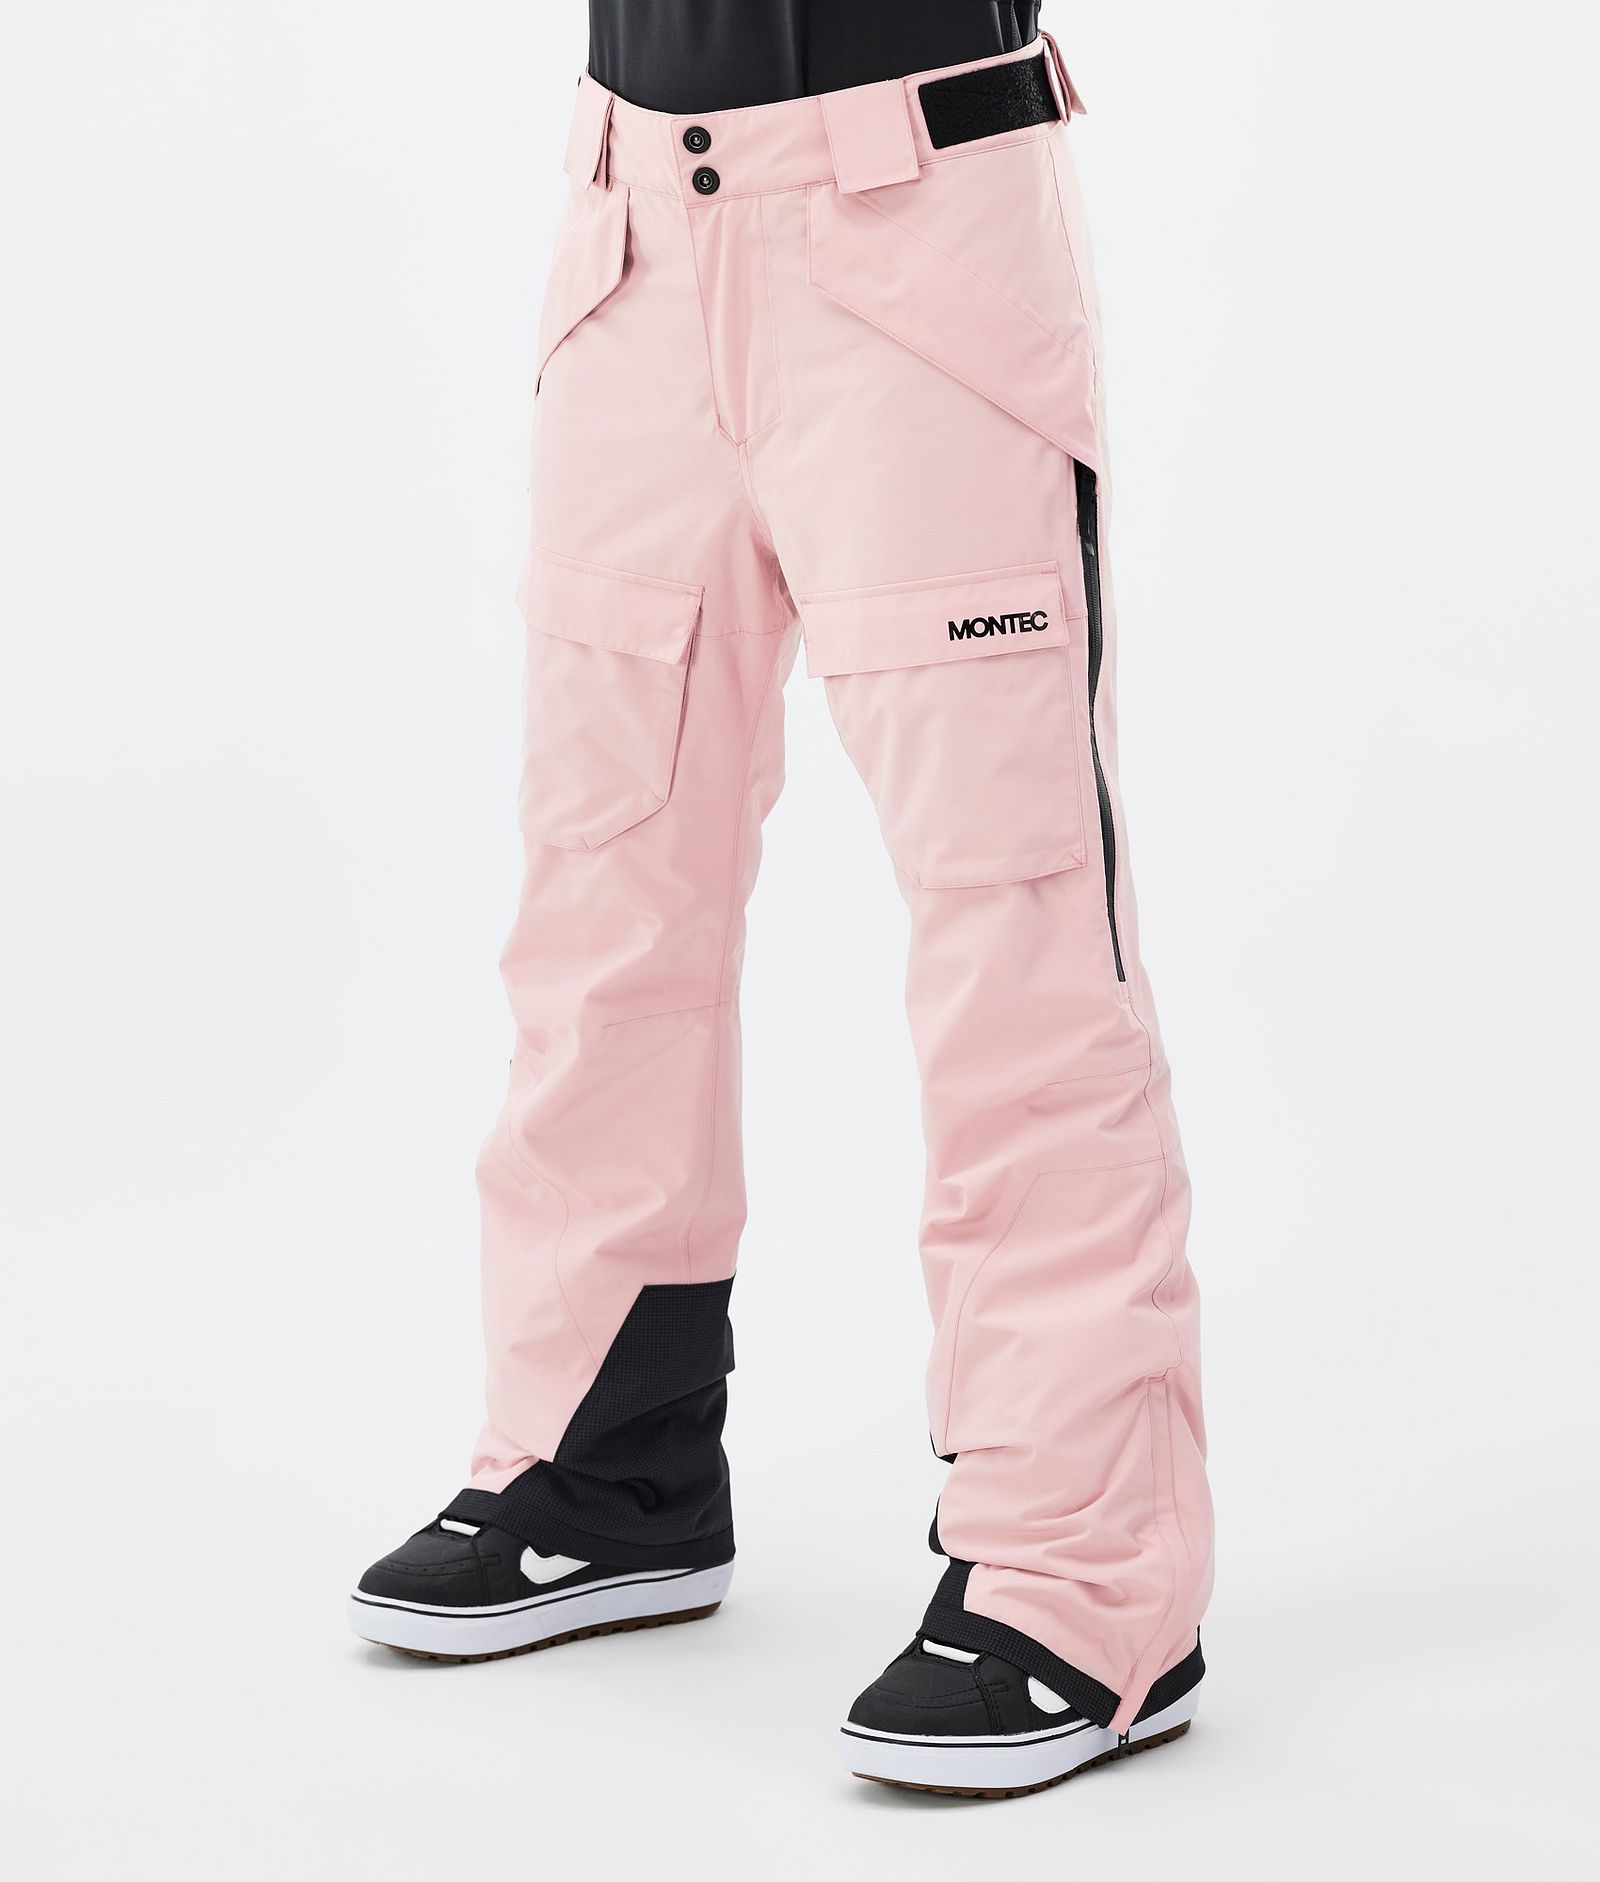 Montec Kirin W Pantalon de Snowboard Femme Soft Pink, Image 1 sur 6